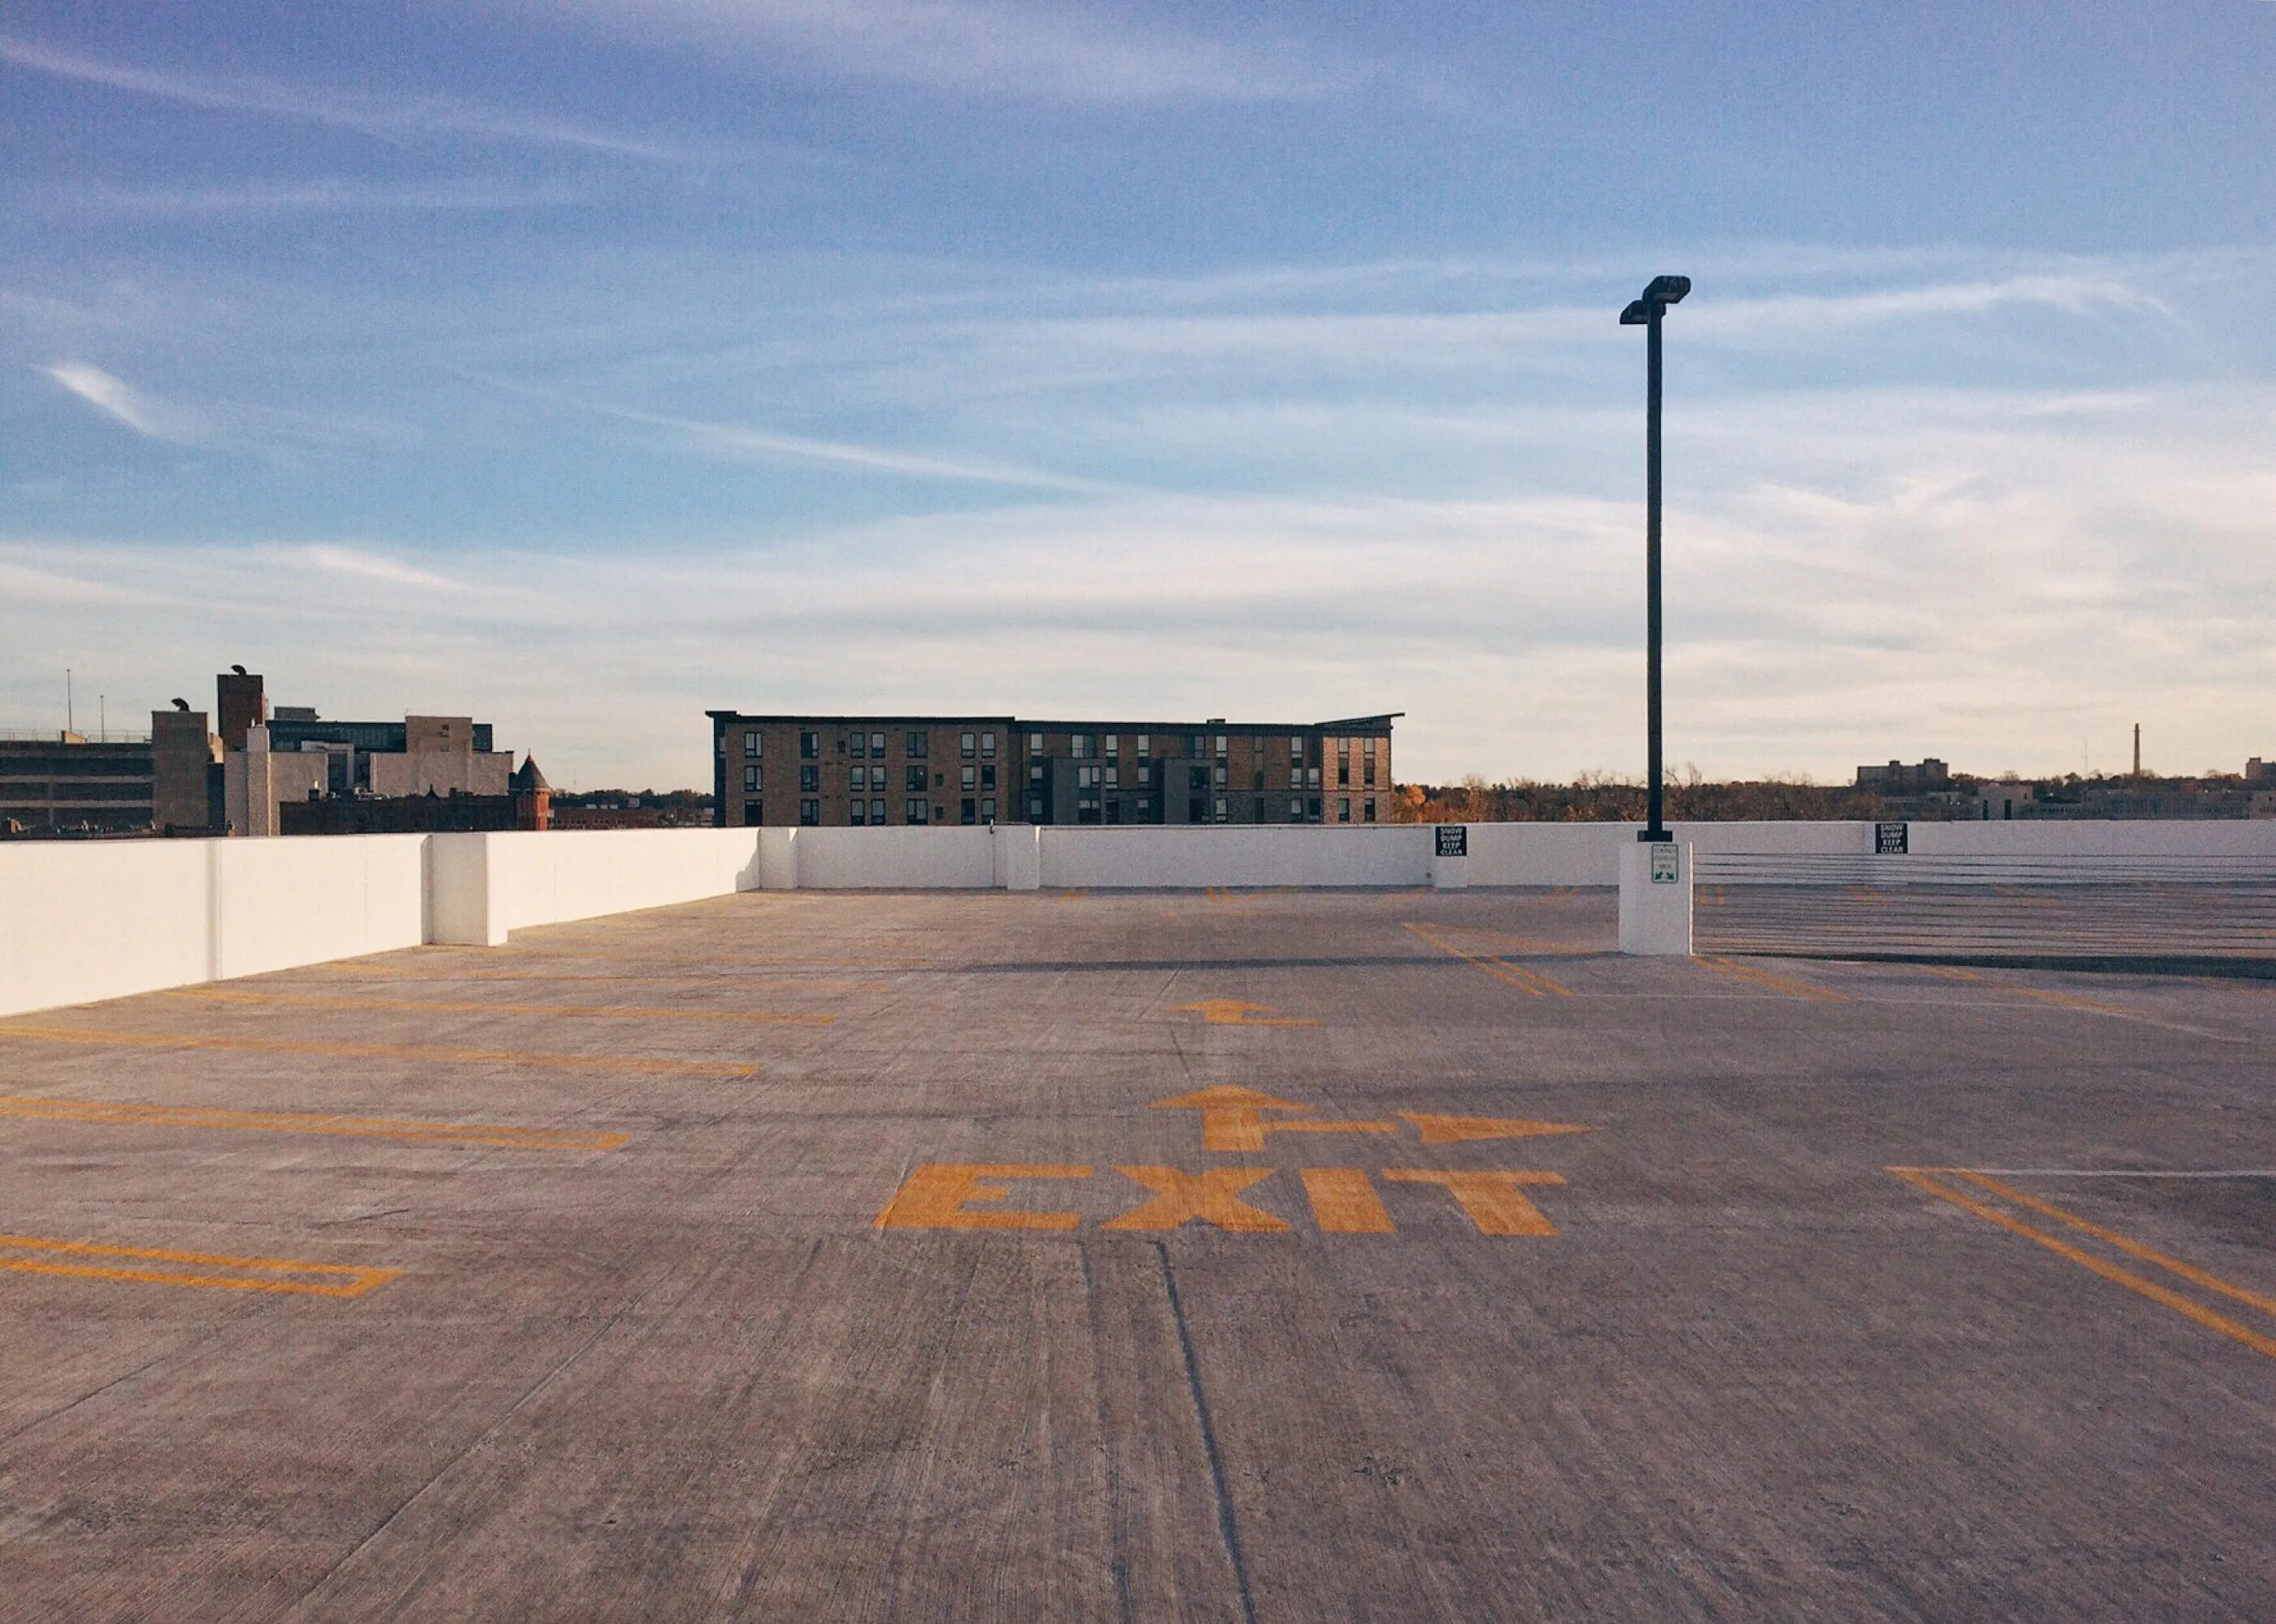 More parking lots. Фон город стоянка. Пустая площадка. Пустая парковка. Парковка фон для фотошопа.